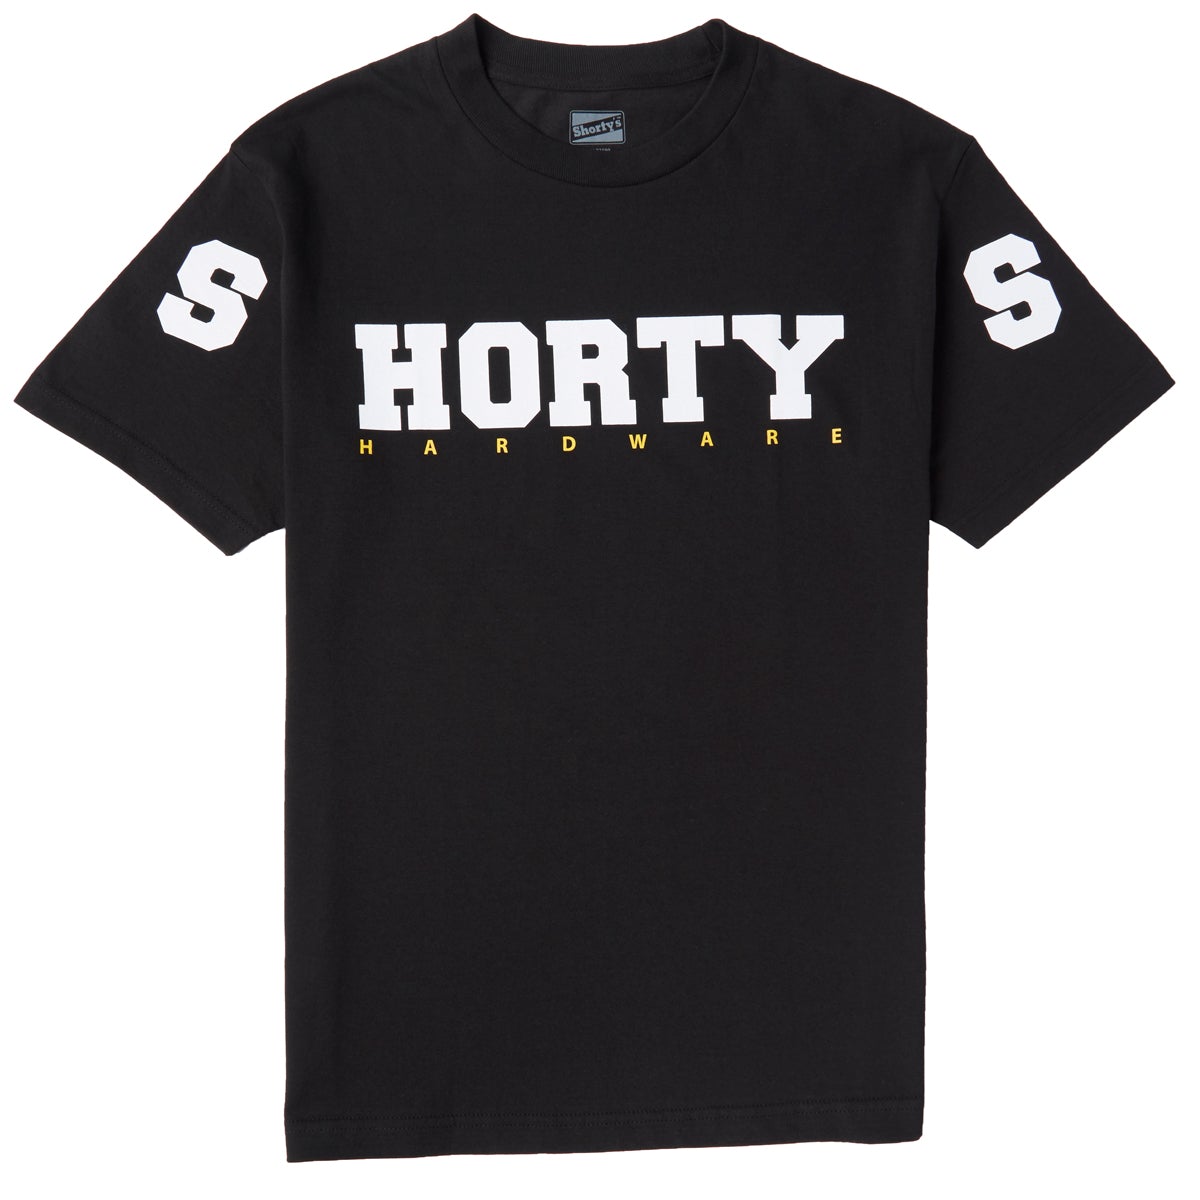 Shorty's S-horty-S T-Shirt - Black image 1